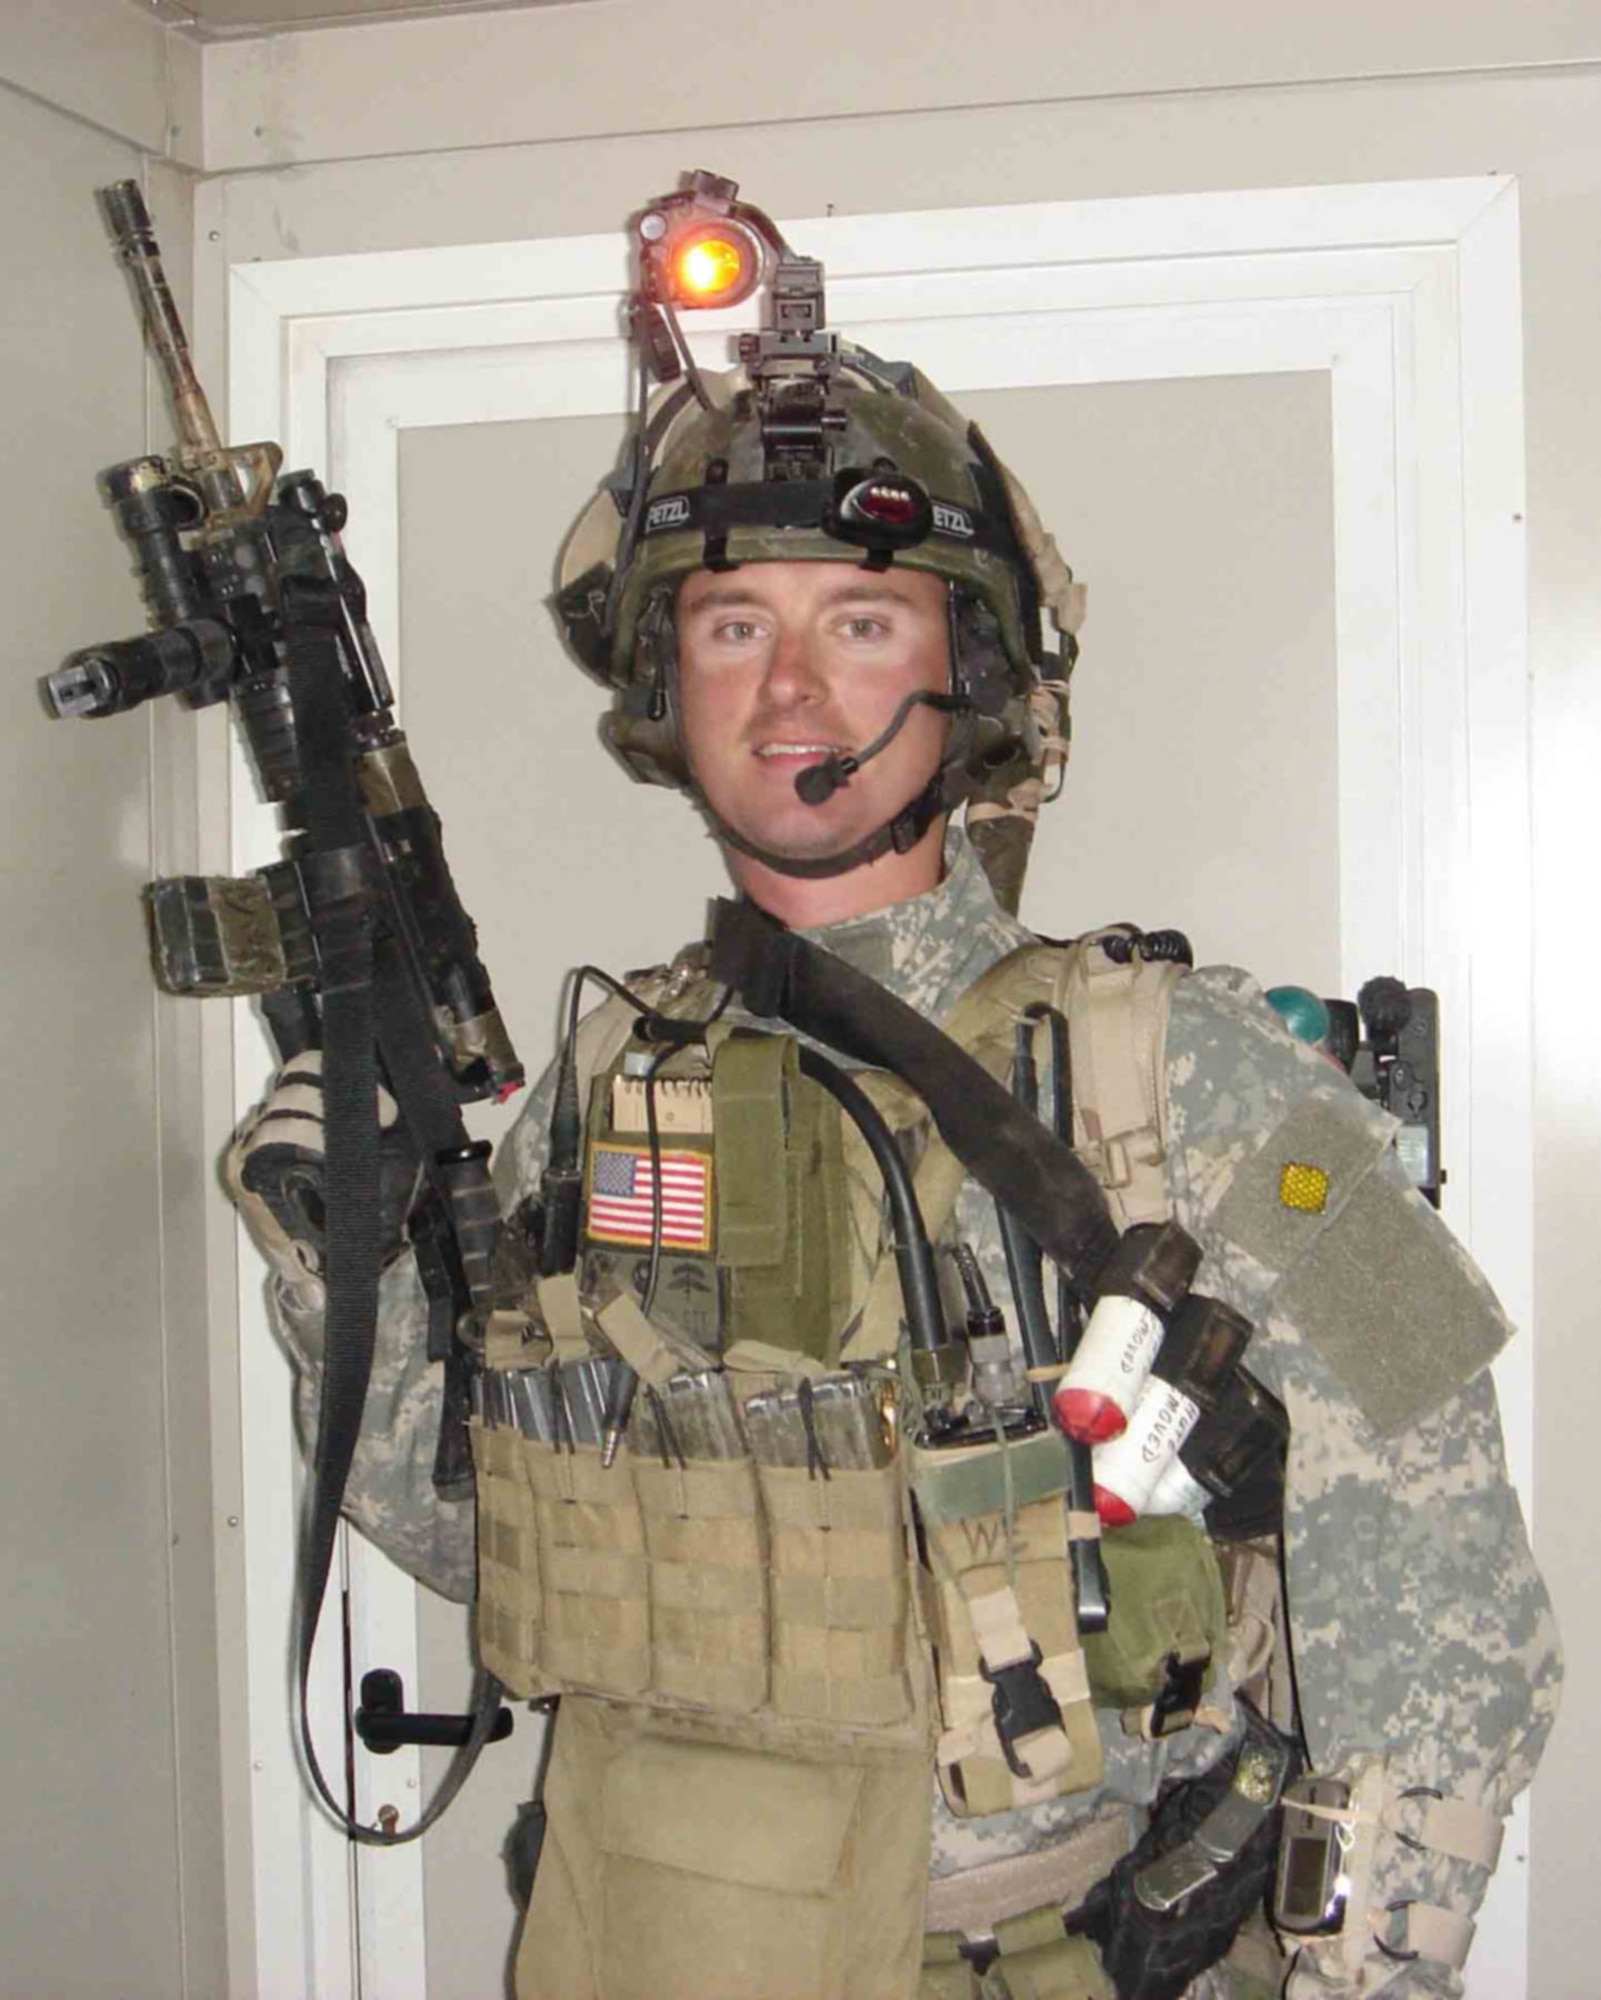 Staff Sgt. Ryan Wallace in full battle gear. (U.S. Air Force photo)